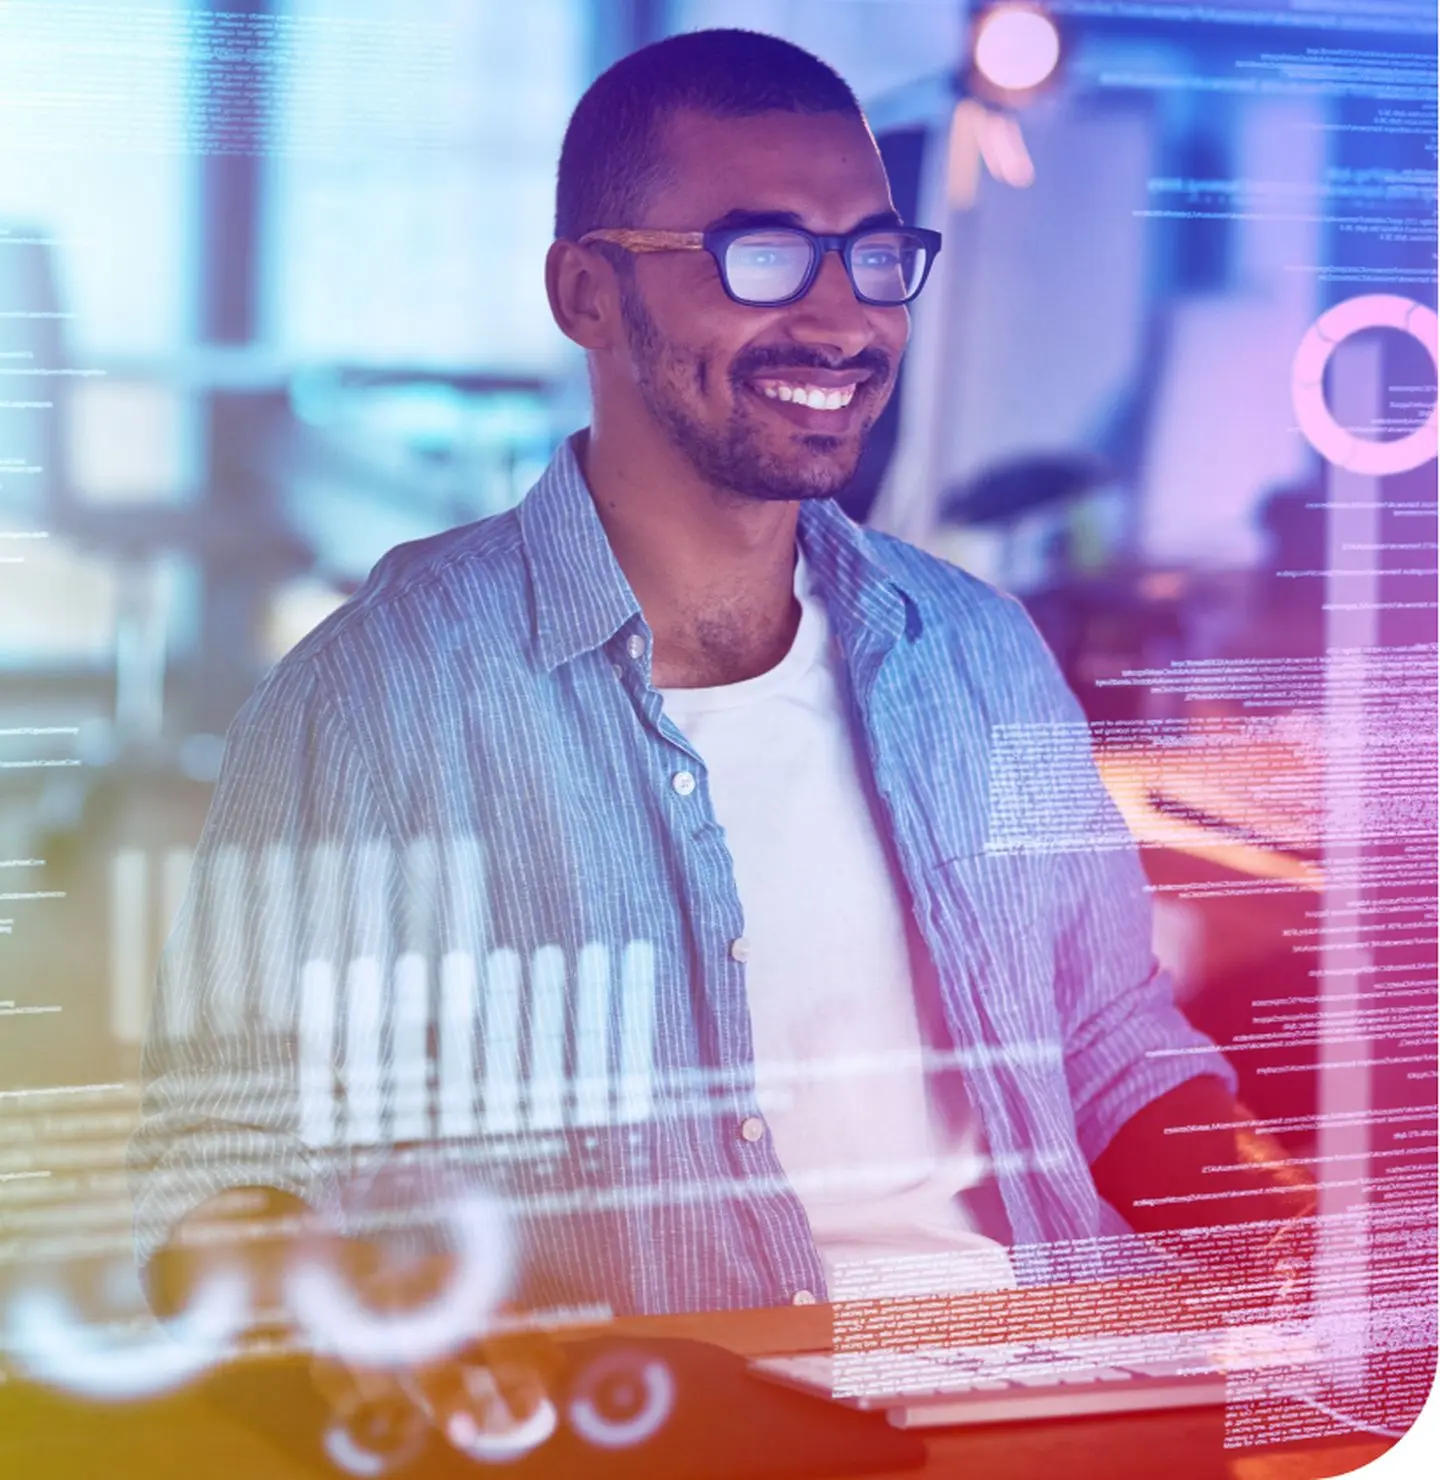 Image of man coding happily at computer